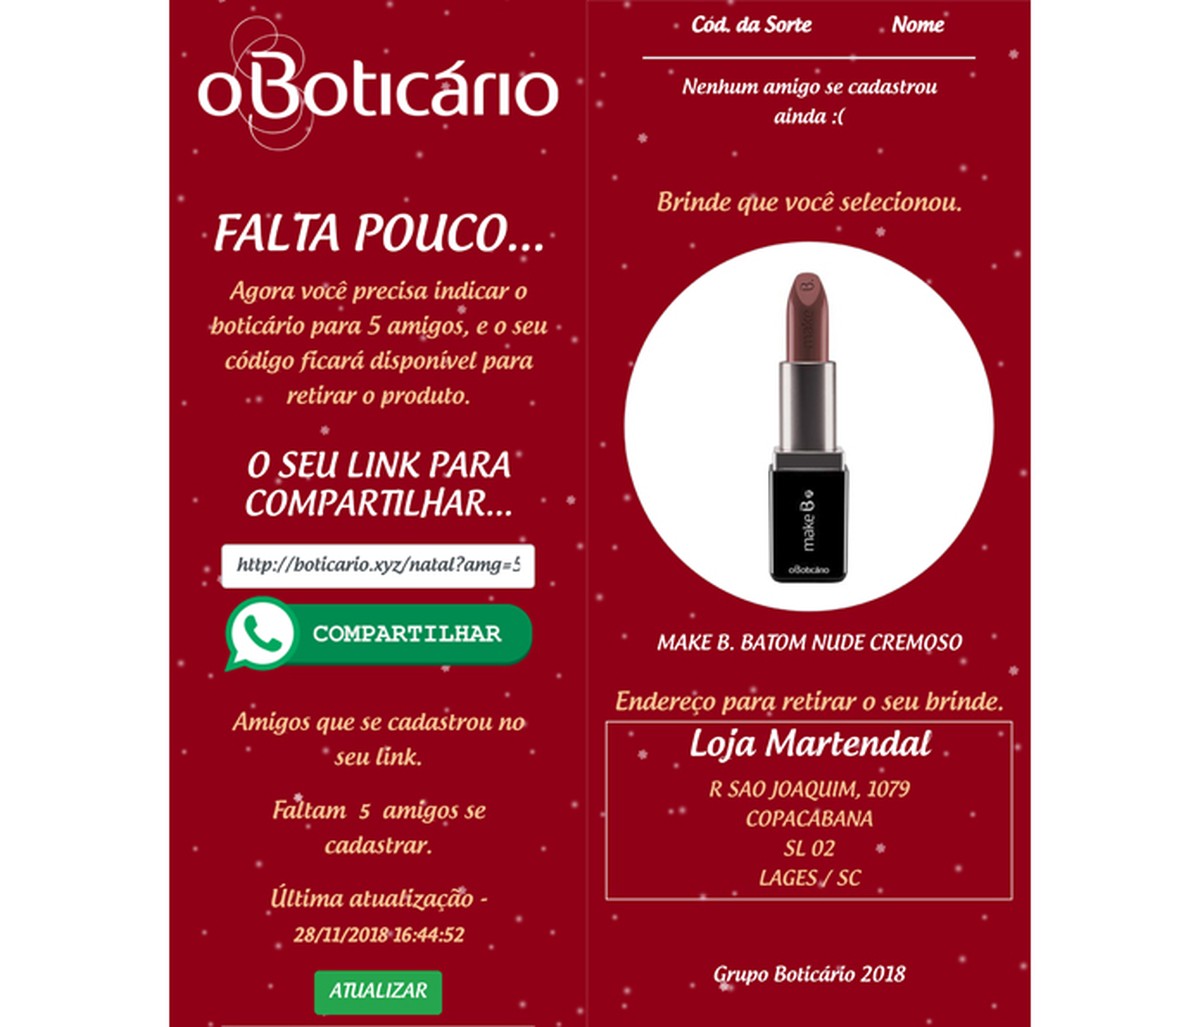 WhatsApp: O Boticrio Christmas promotion coup, warns PSafe | Social networks